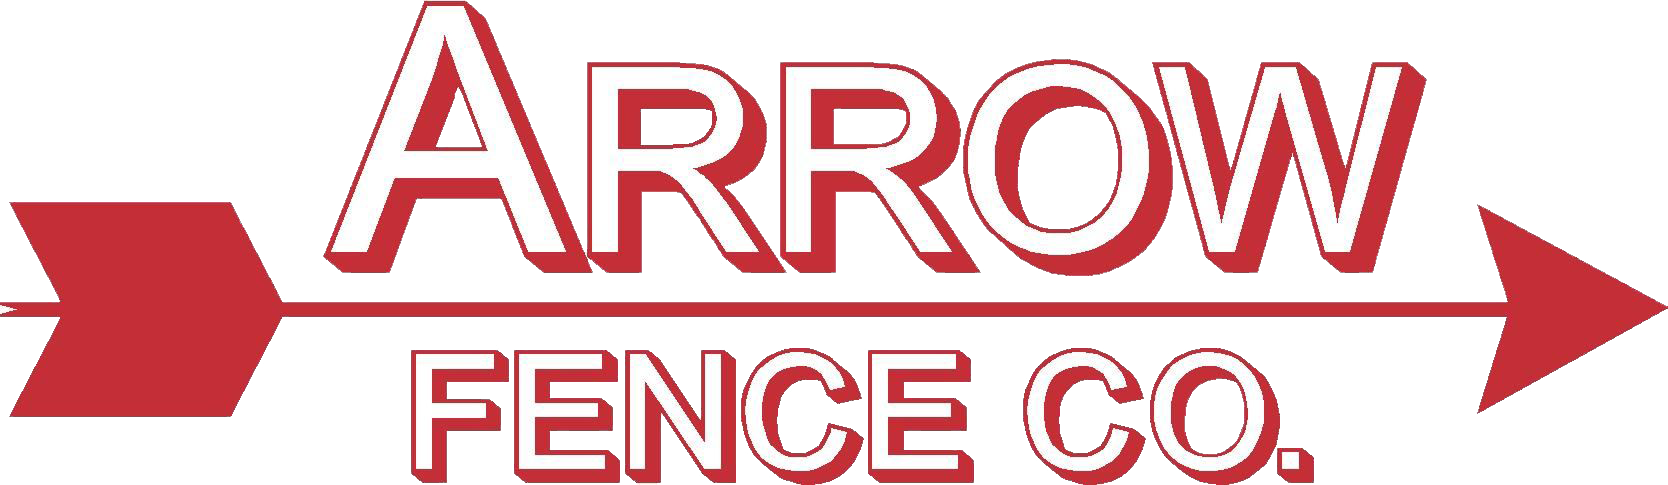 Arrow Fence -Logo